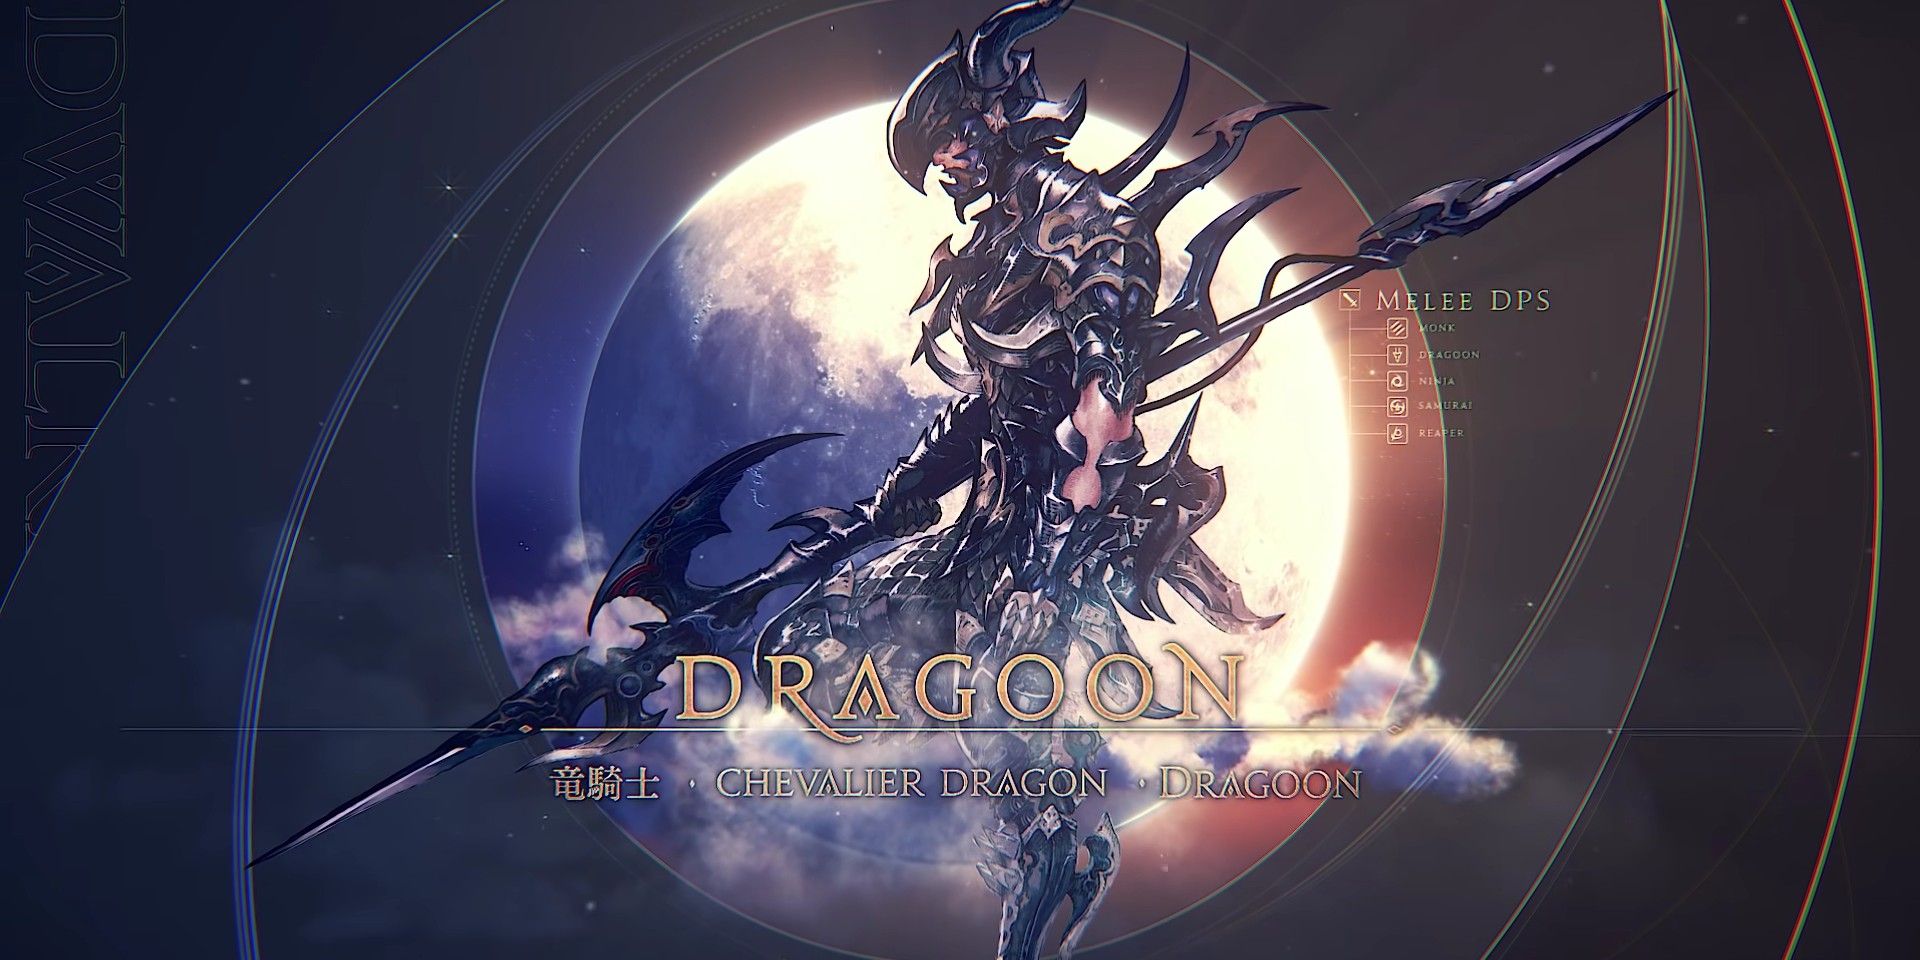 Final Fantasy XIV Endwalker Dragoon In Job Changes Video